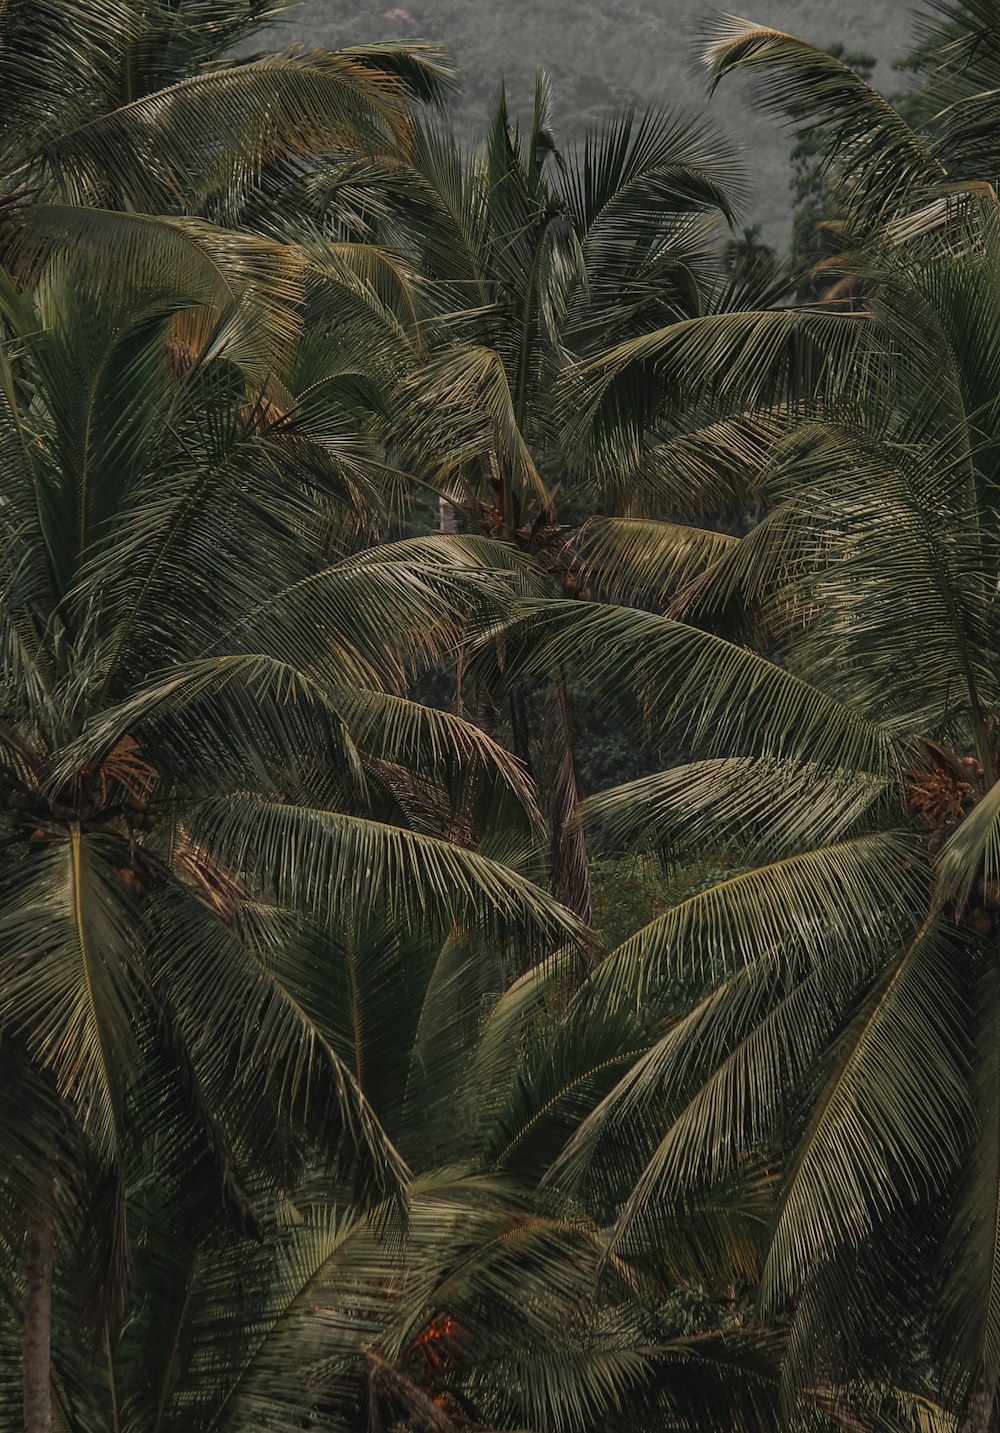 Un grupo de palmeras